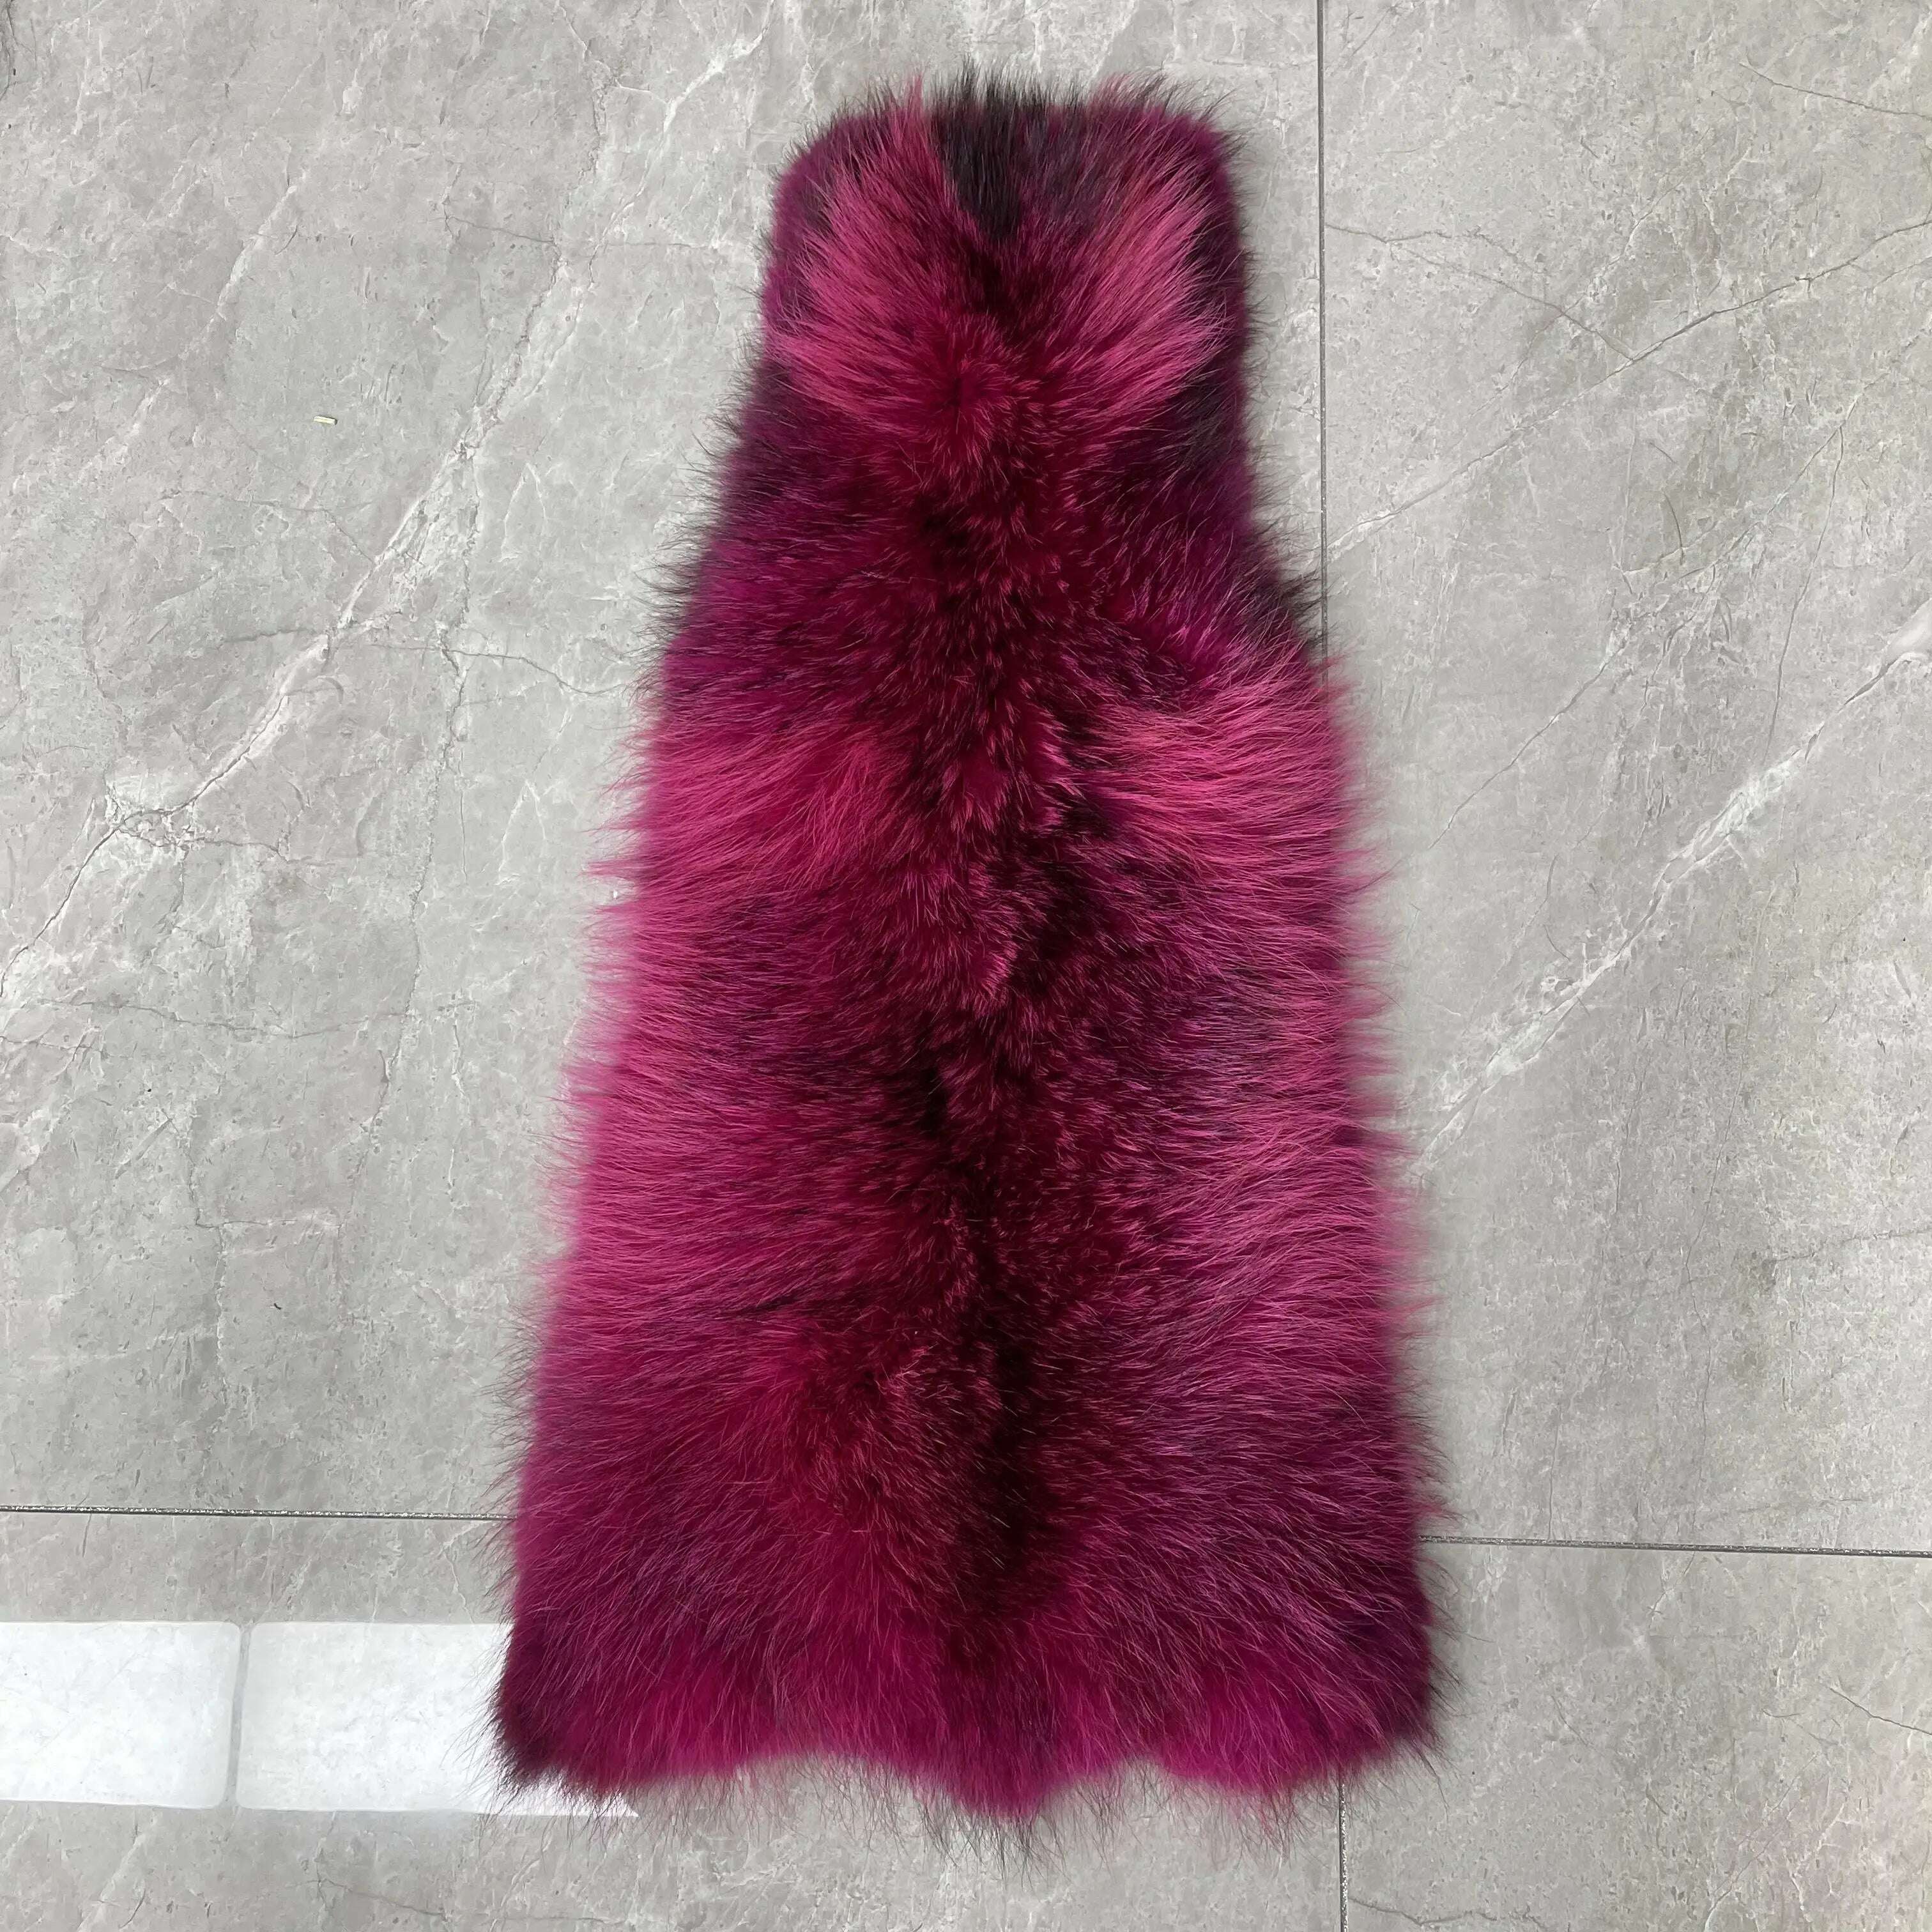 KIMLUD, Real Raccoon Fur Jacket Men Fashion Coat Winter Warm Long Style, Hot Pink / XS(88cm), KIMLUD Womens Clothes